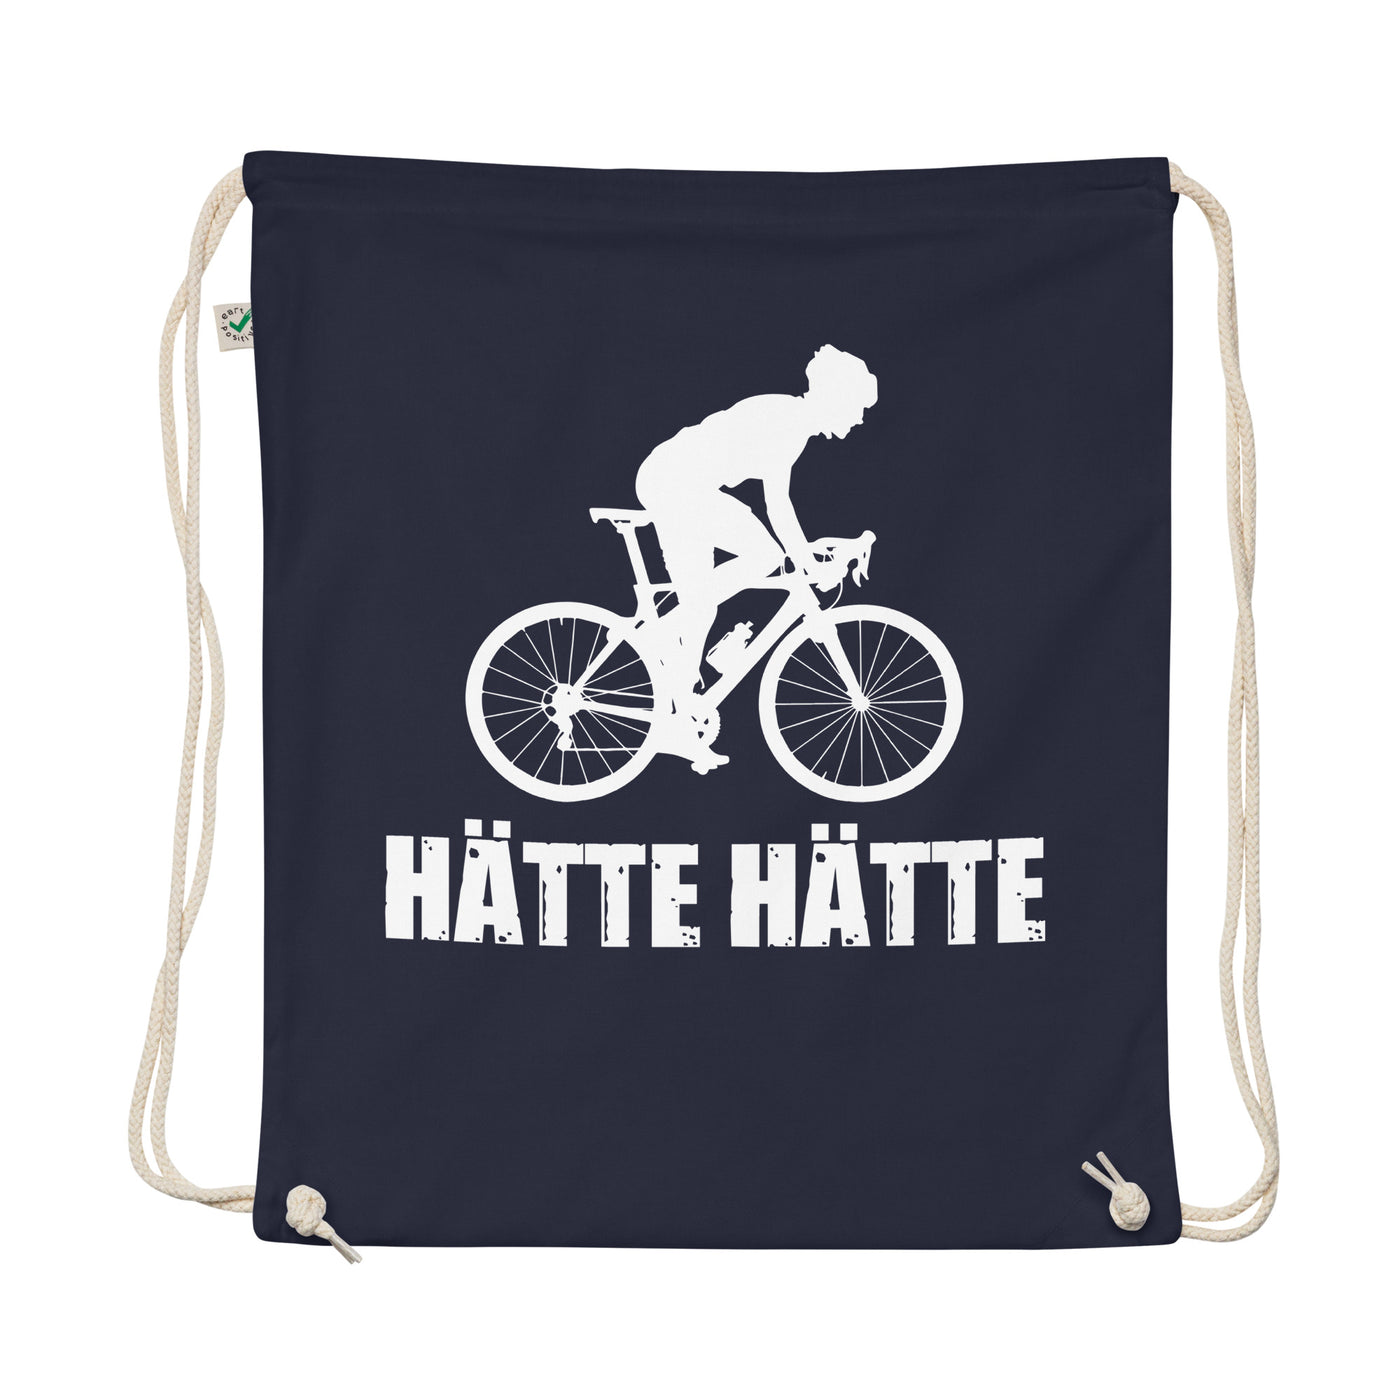 Hatte Hatte 2 - Organic Turnbeutel fahrrad